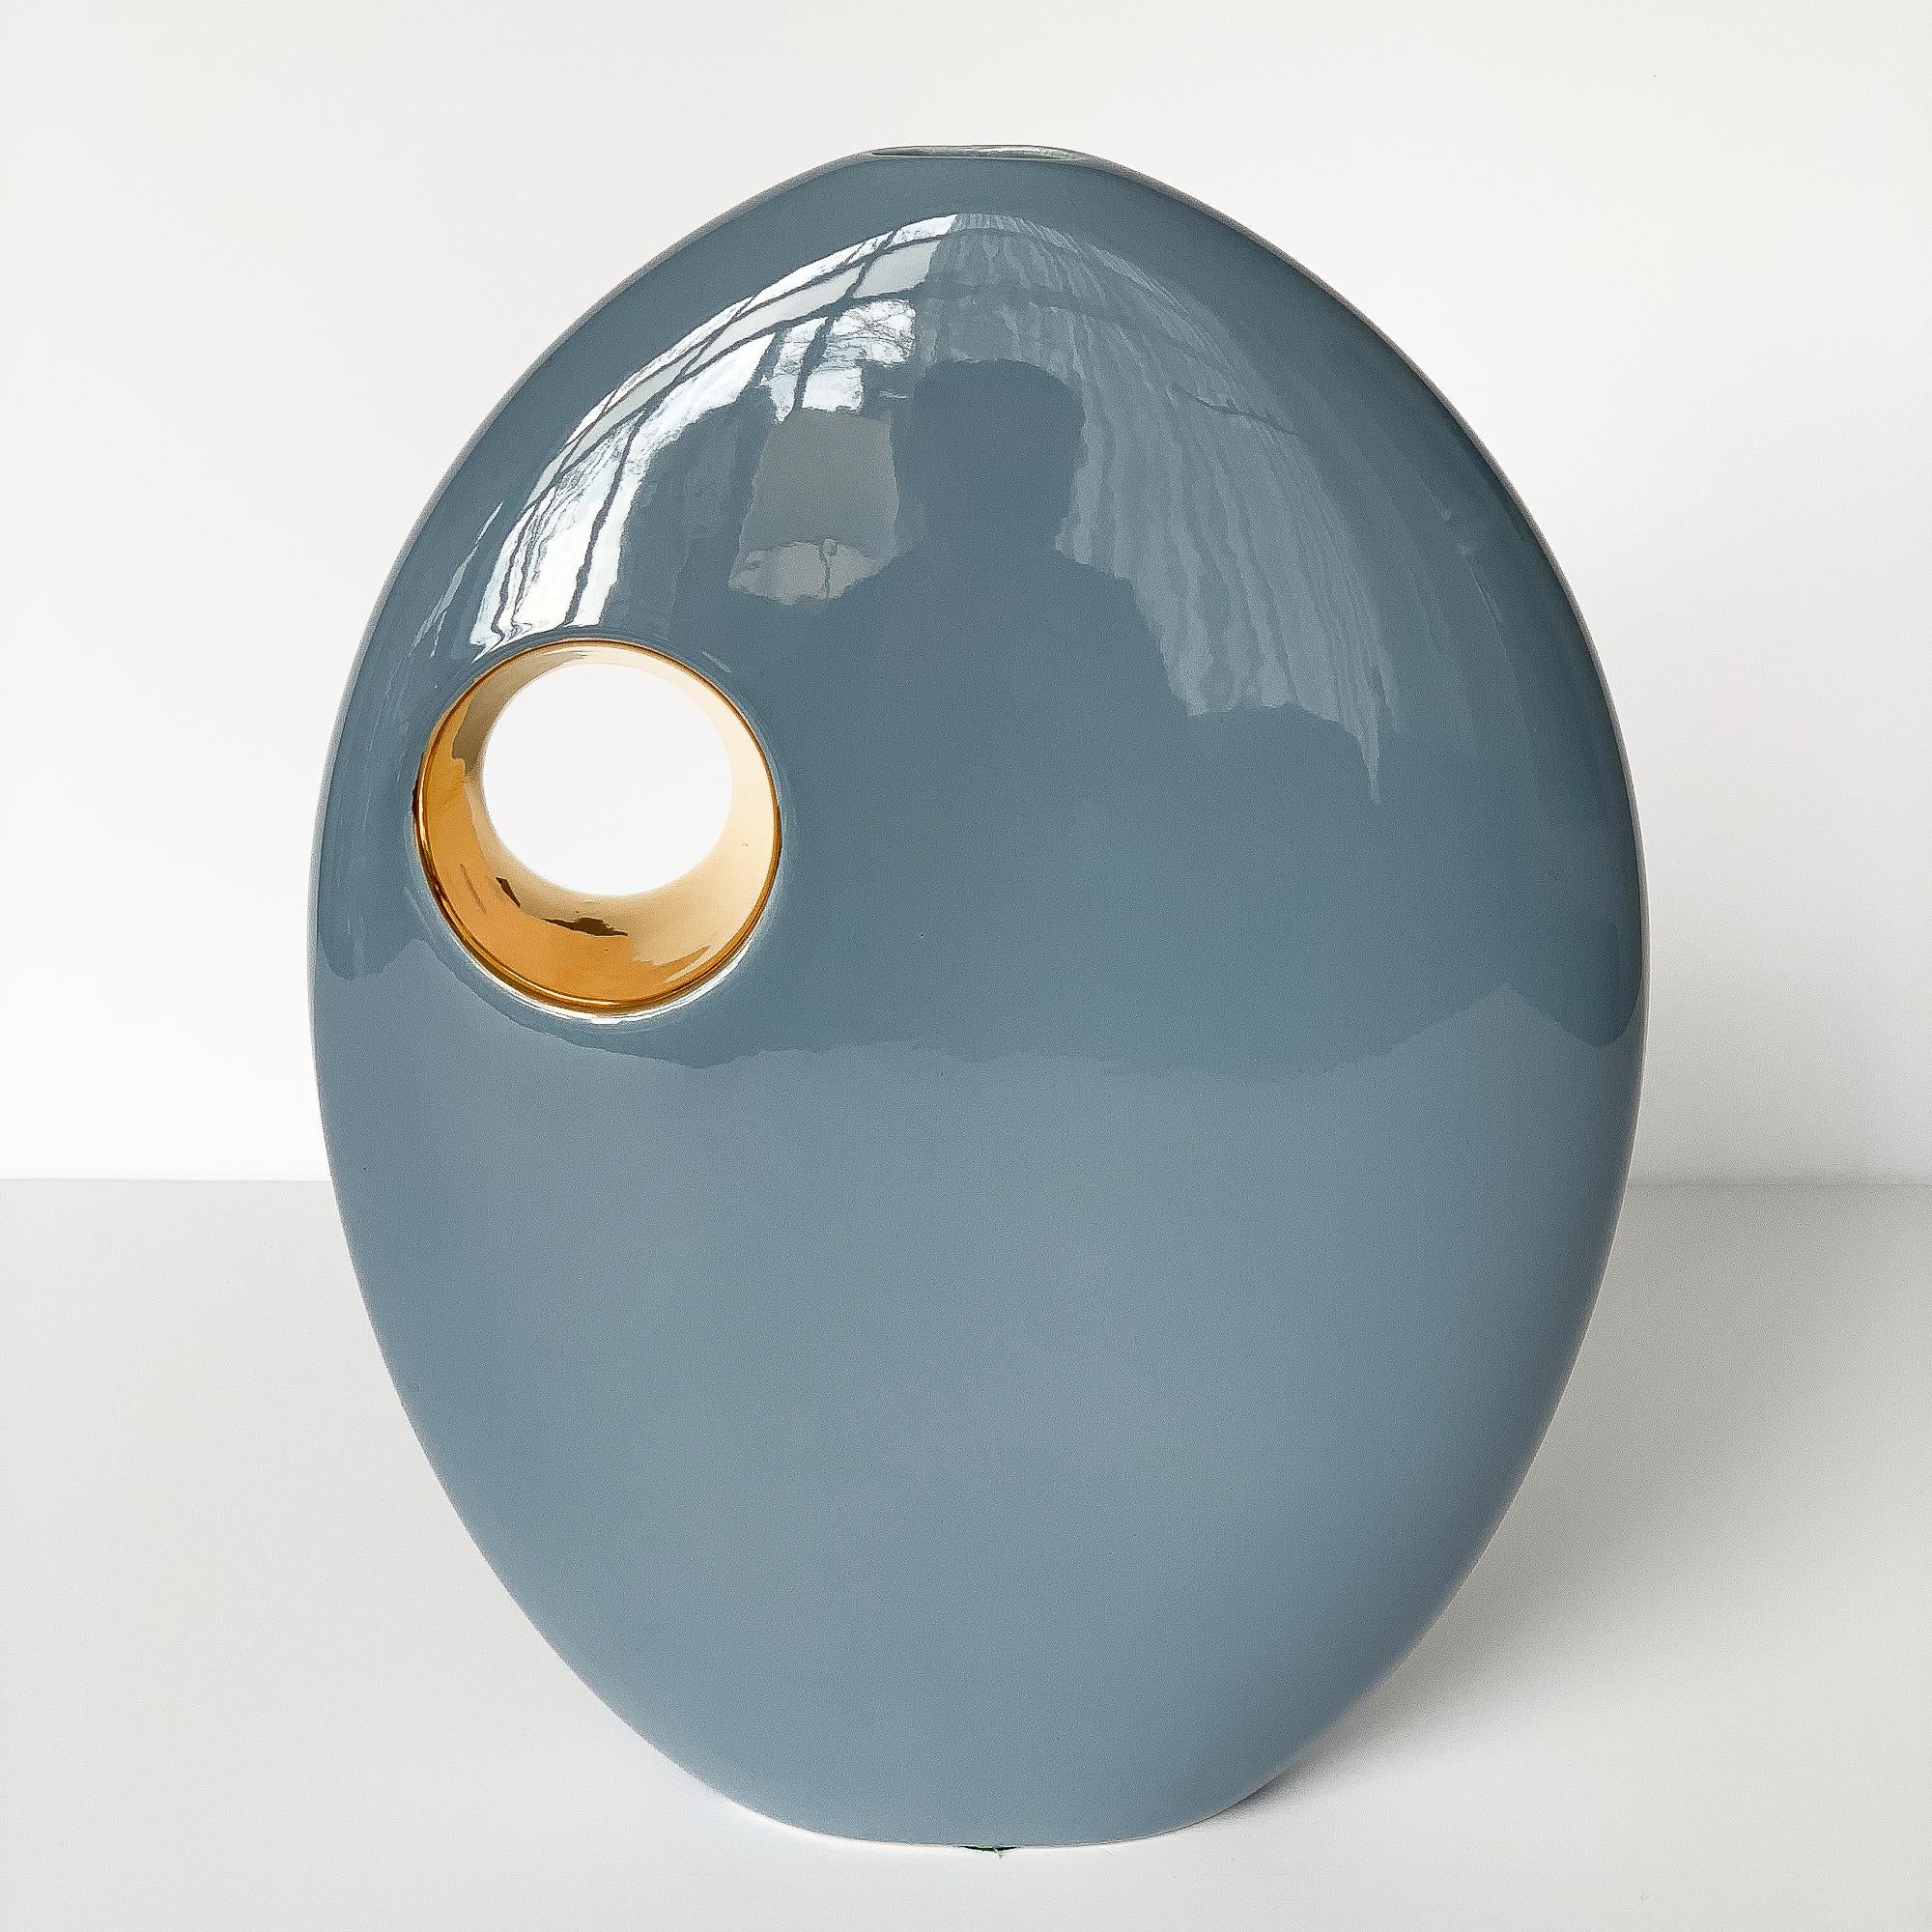 Jaru blue glazed and gold sculptural ceramic vase. Pale grayish blue glaze. Metallic gold glaze on the interior of the 3